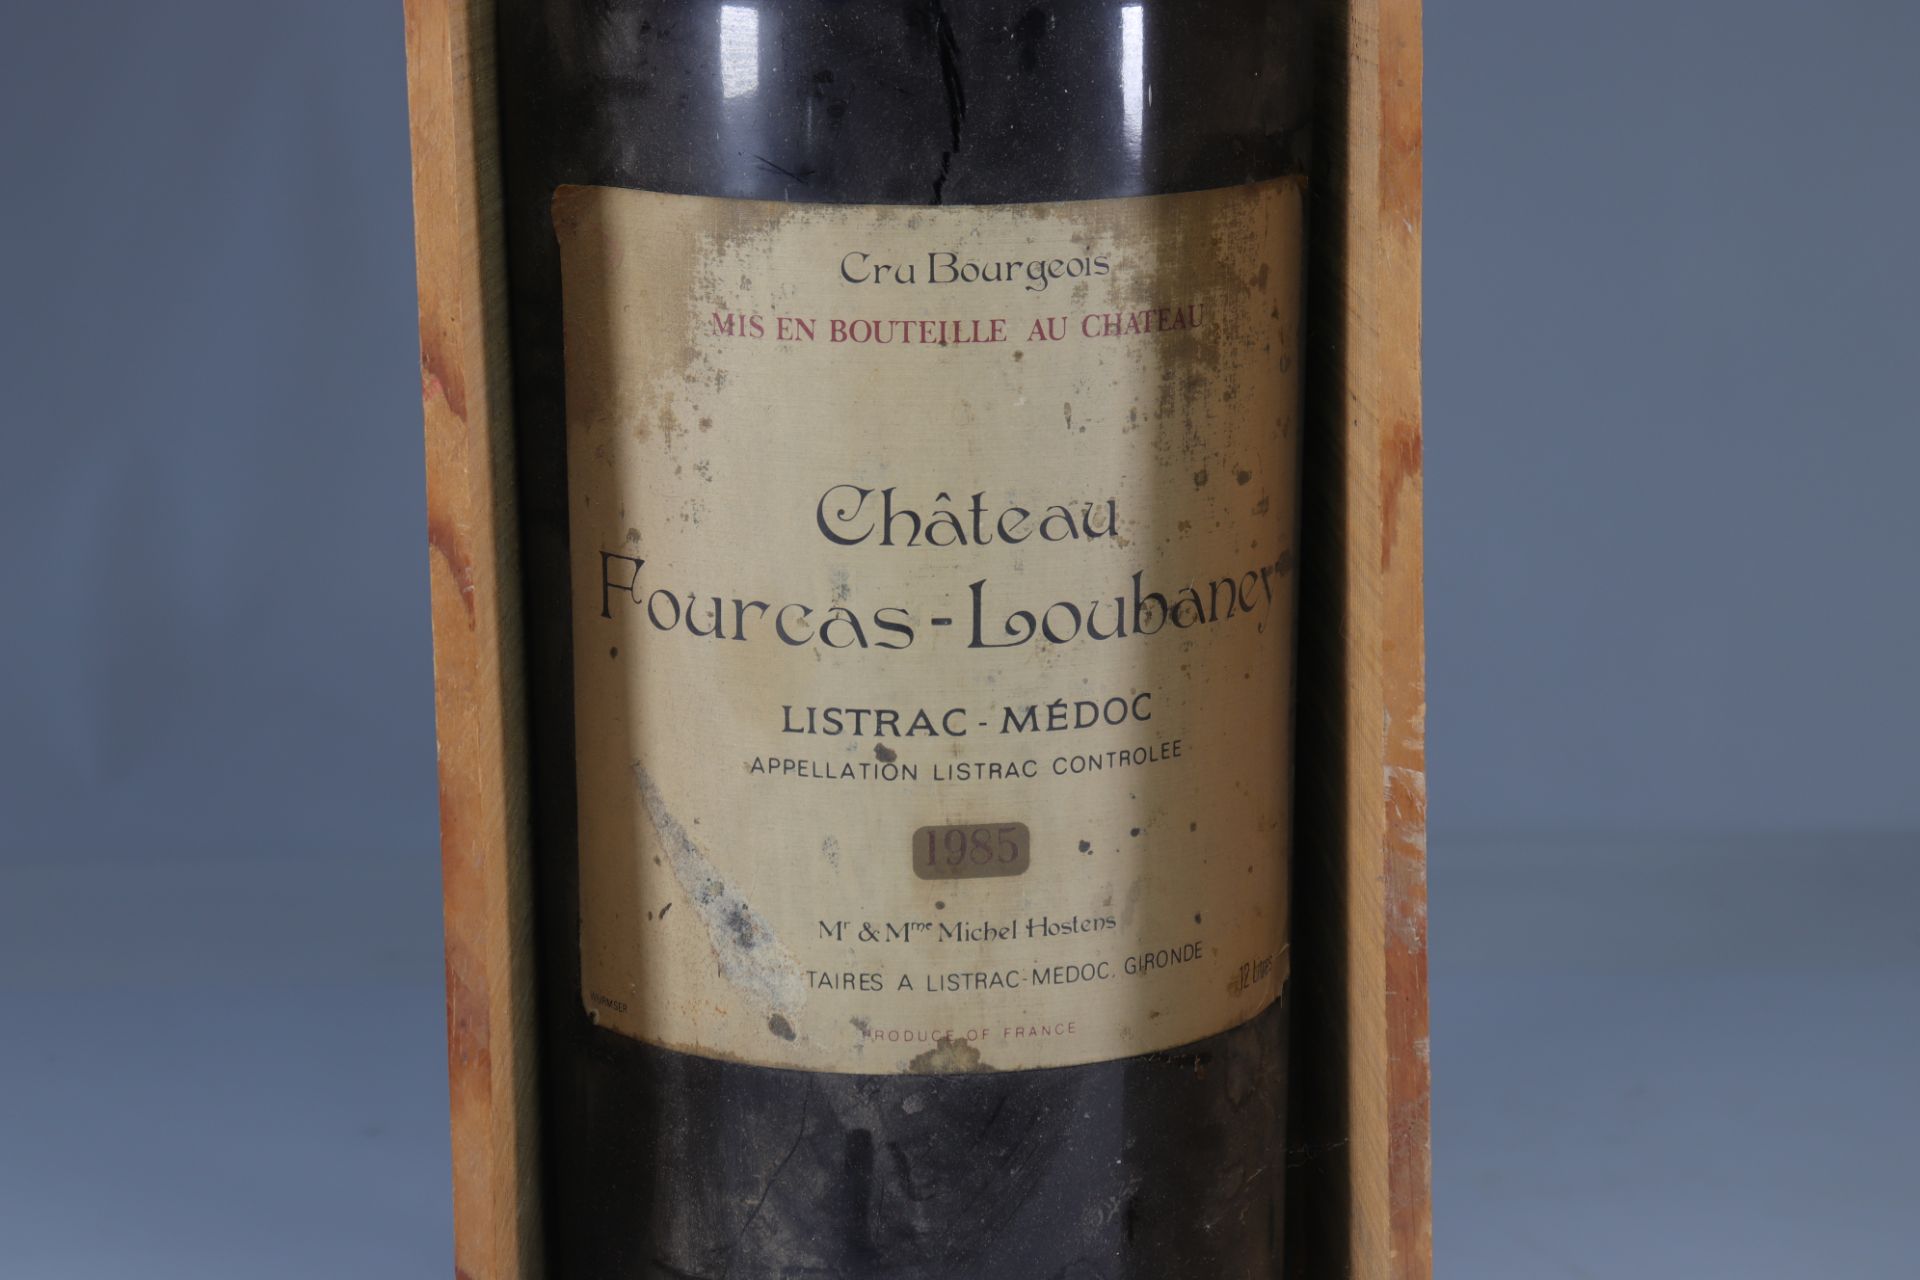 Bottle "Balthazar" Medoc fourcas-loubaney from 1985 - Bild 2 aus 2